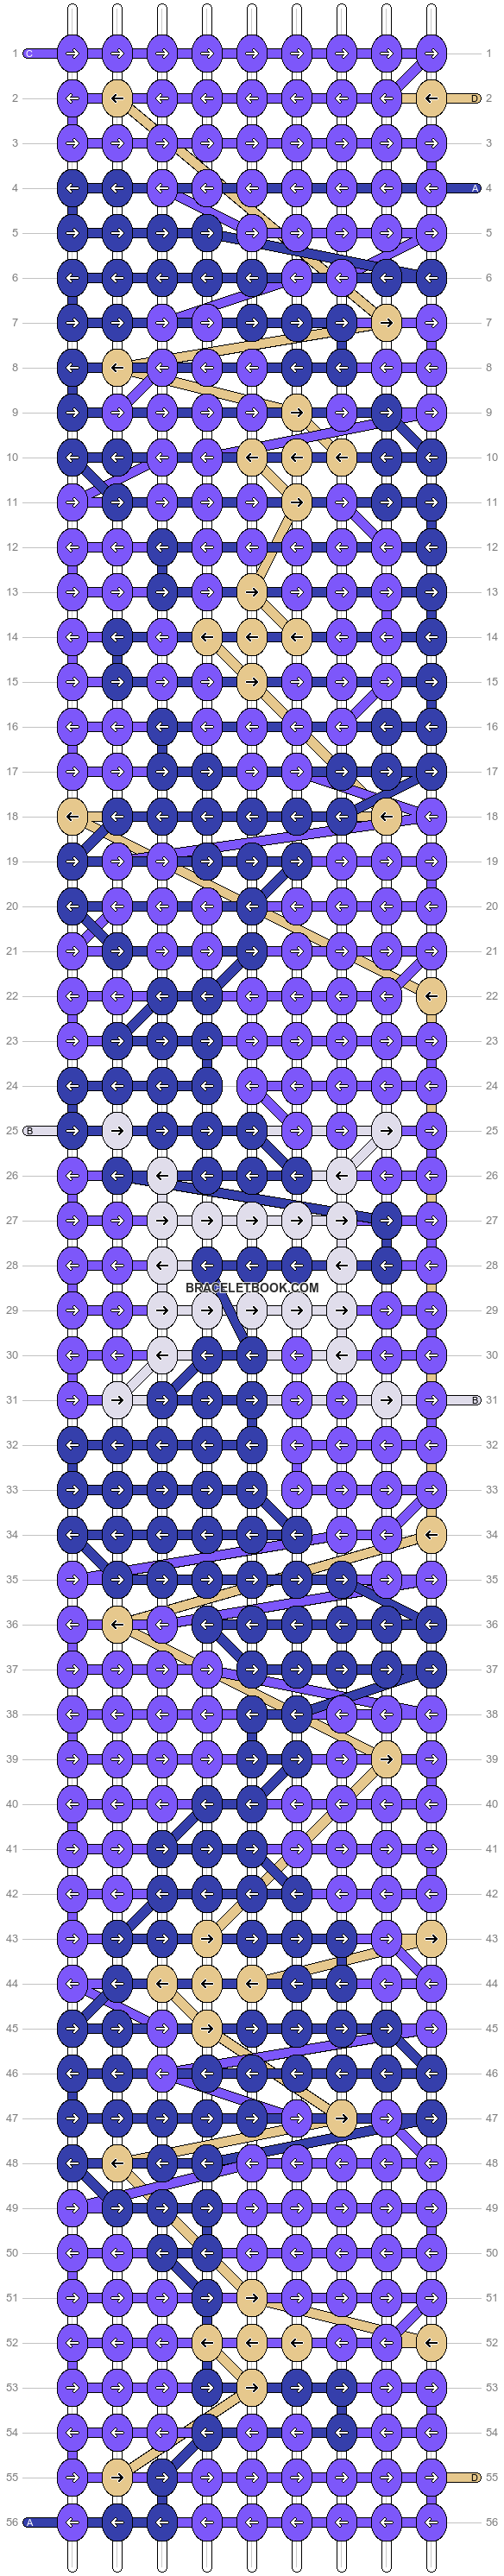 Alpha pattern #84302 pattern